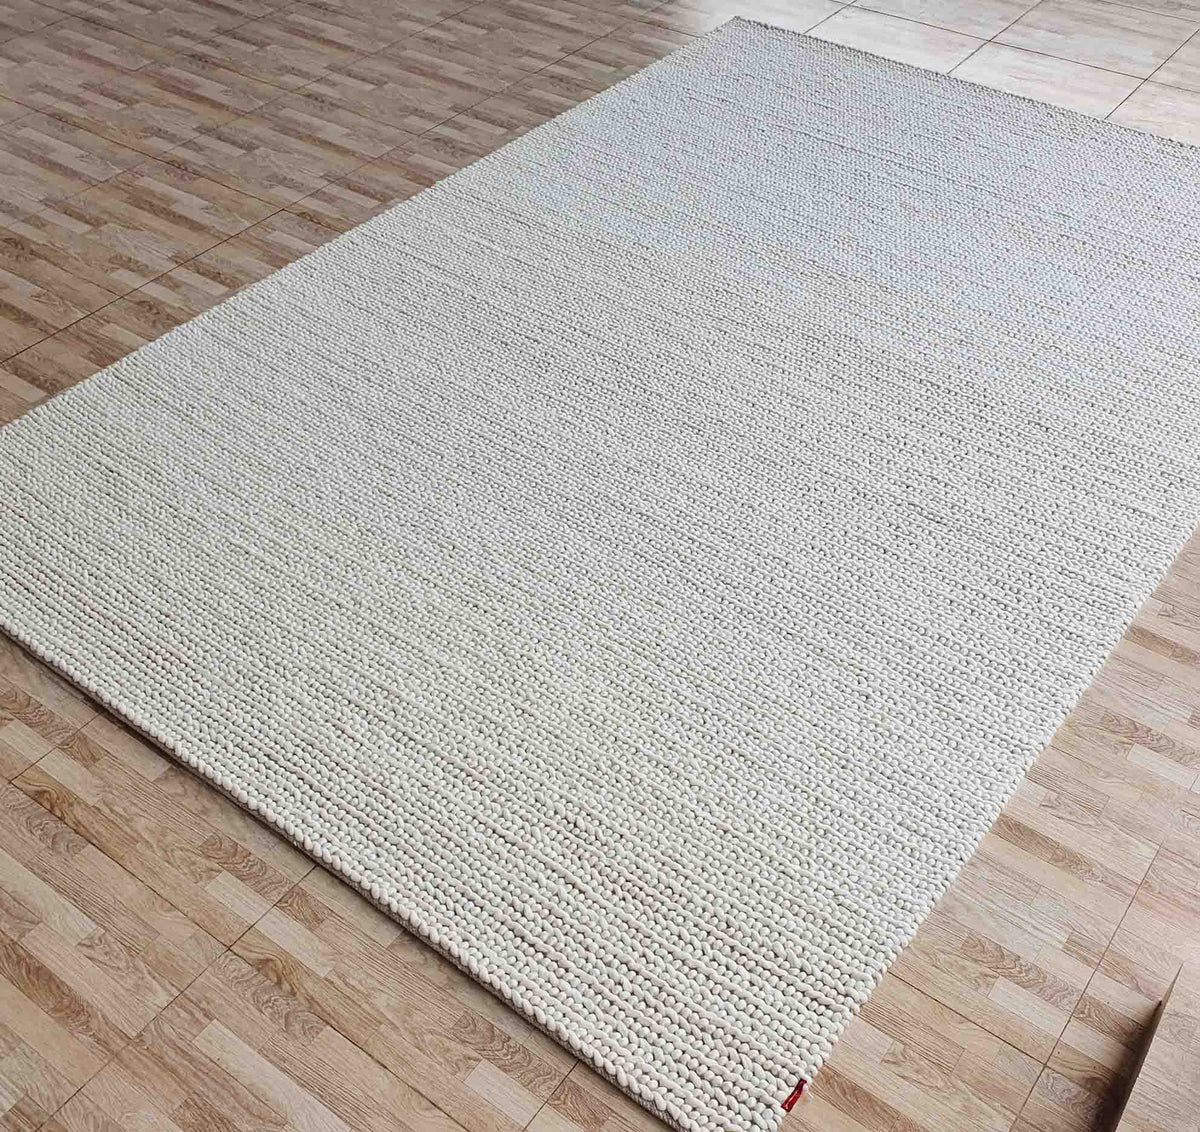 Handmade Natural White Woven Rug For Home Decor (5 Sizes)